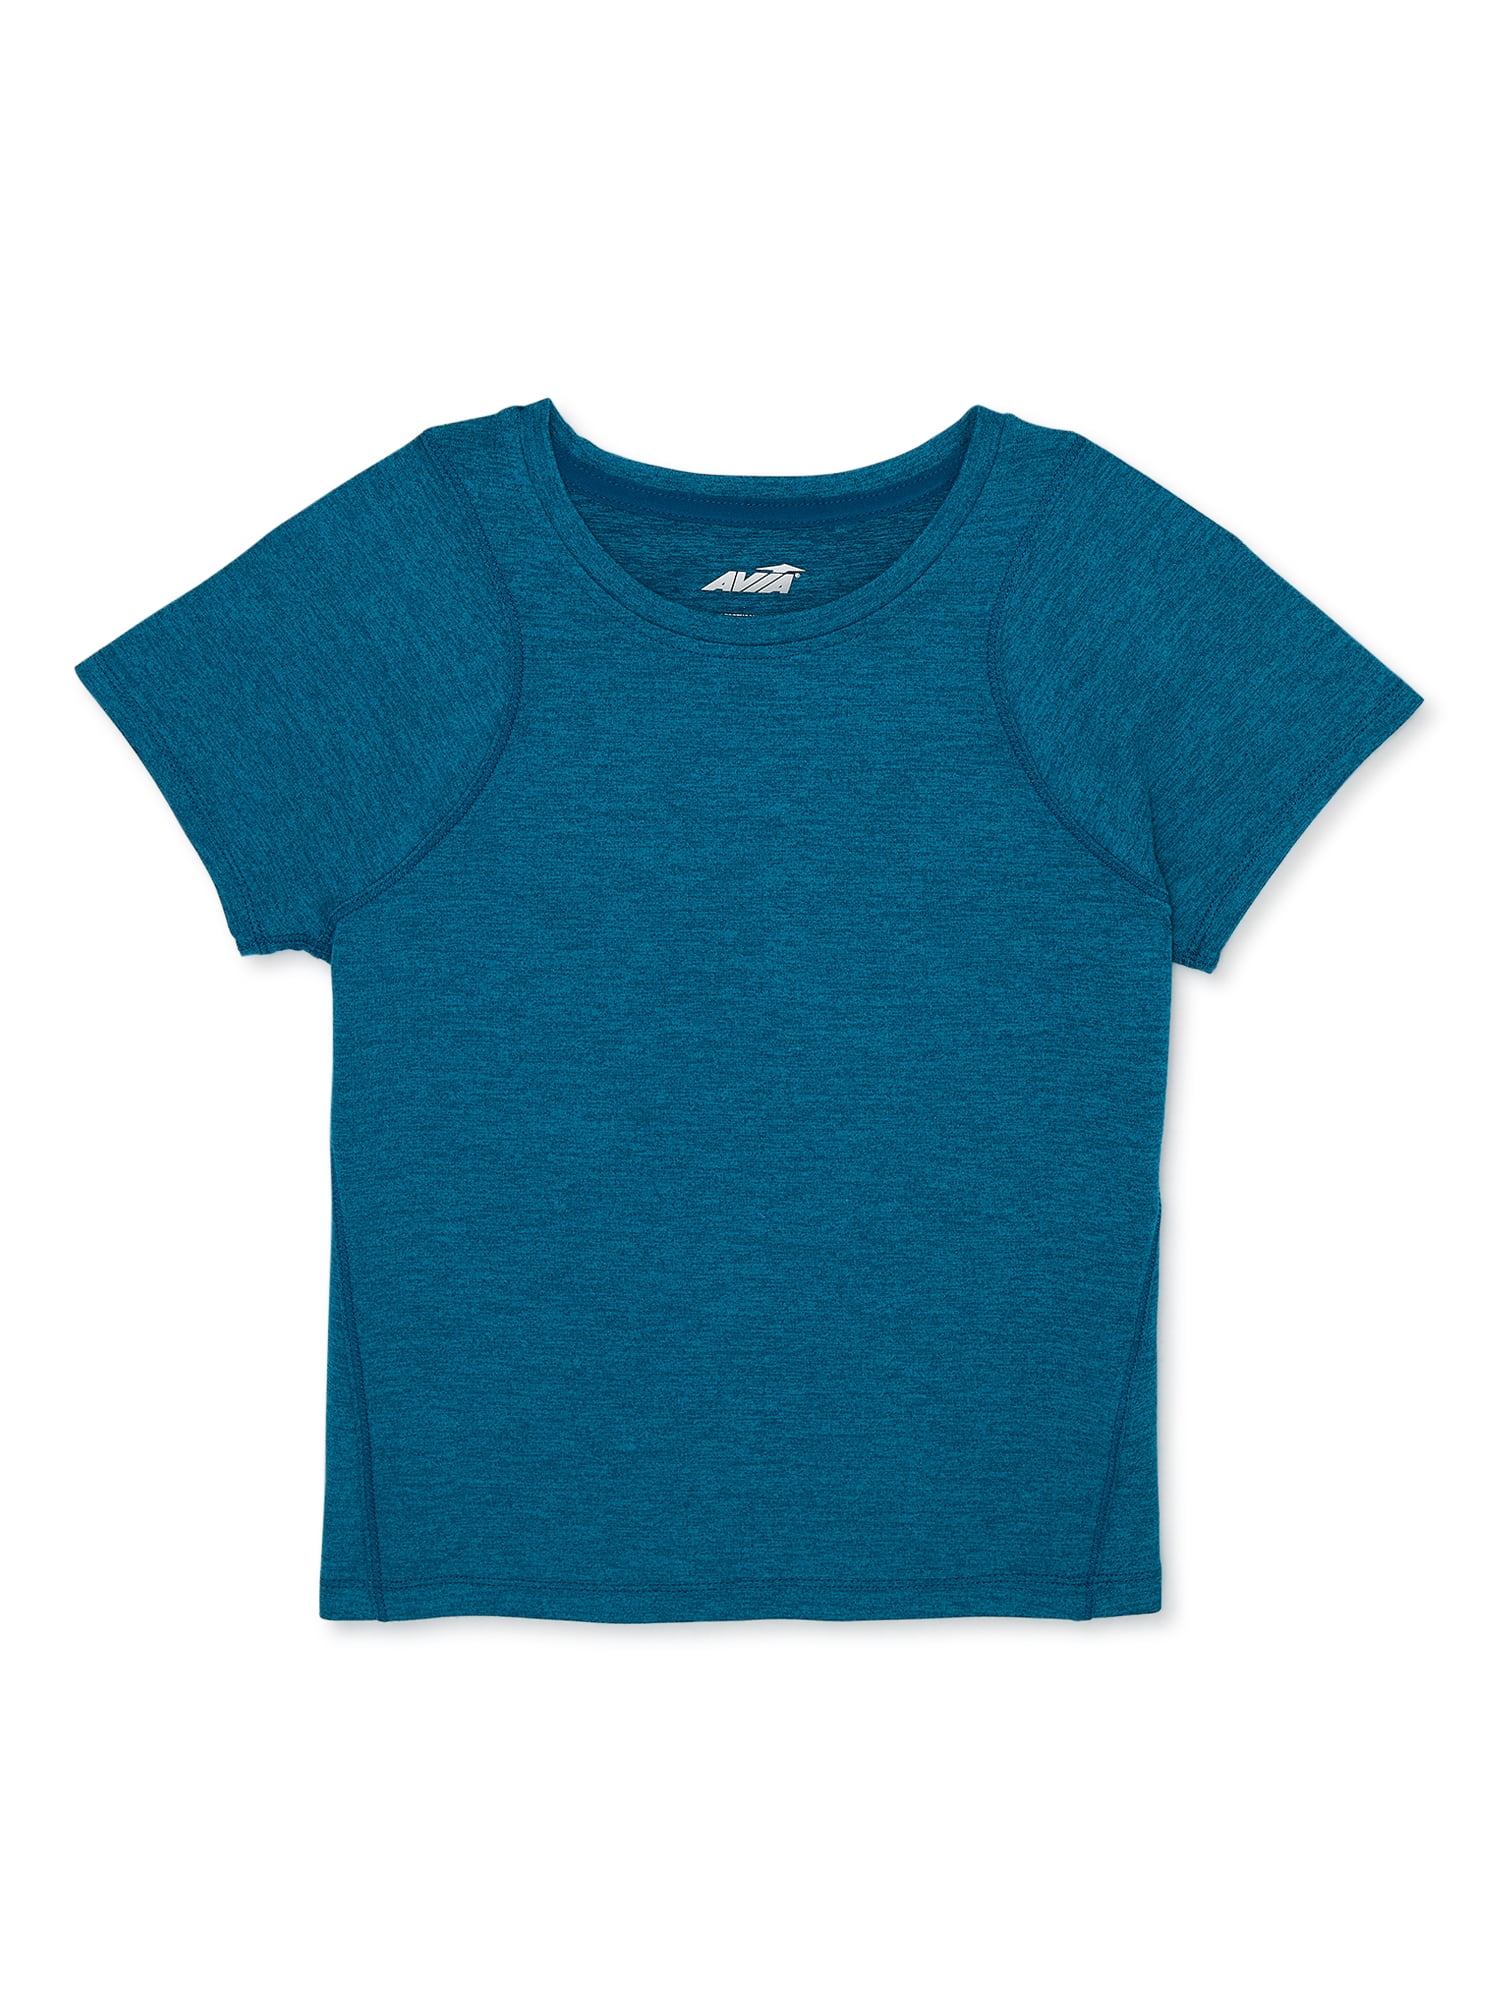 Avia Girls Jersey Performance T-Shirt, Sizes 4-18 & Plus - Walmart.com